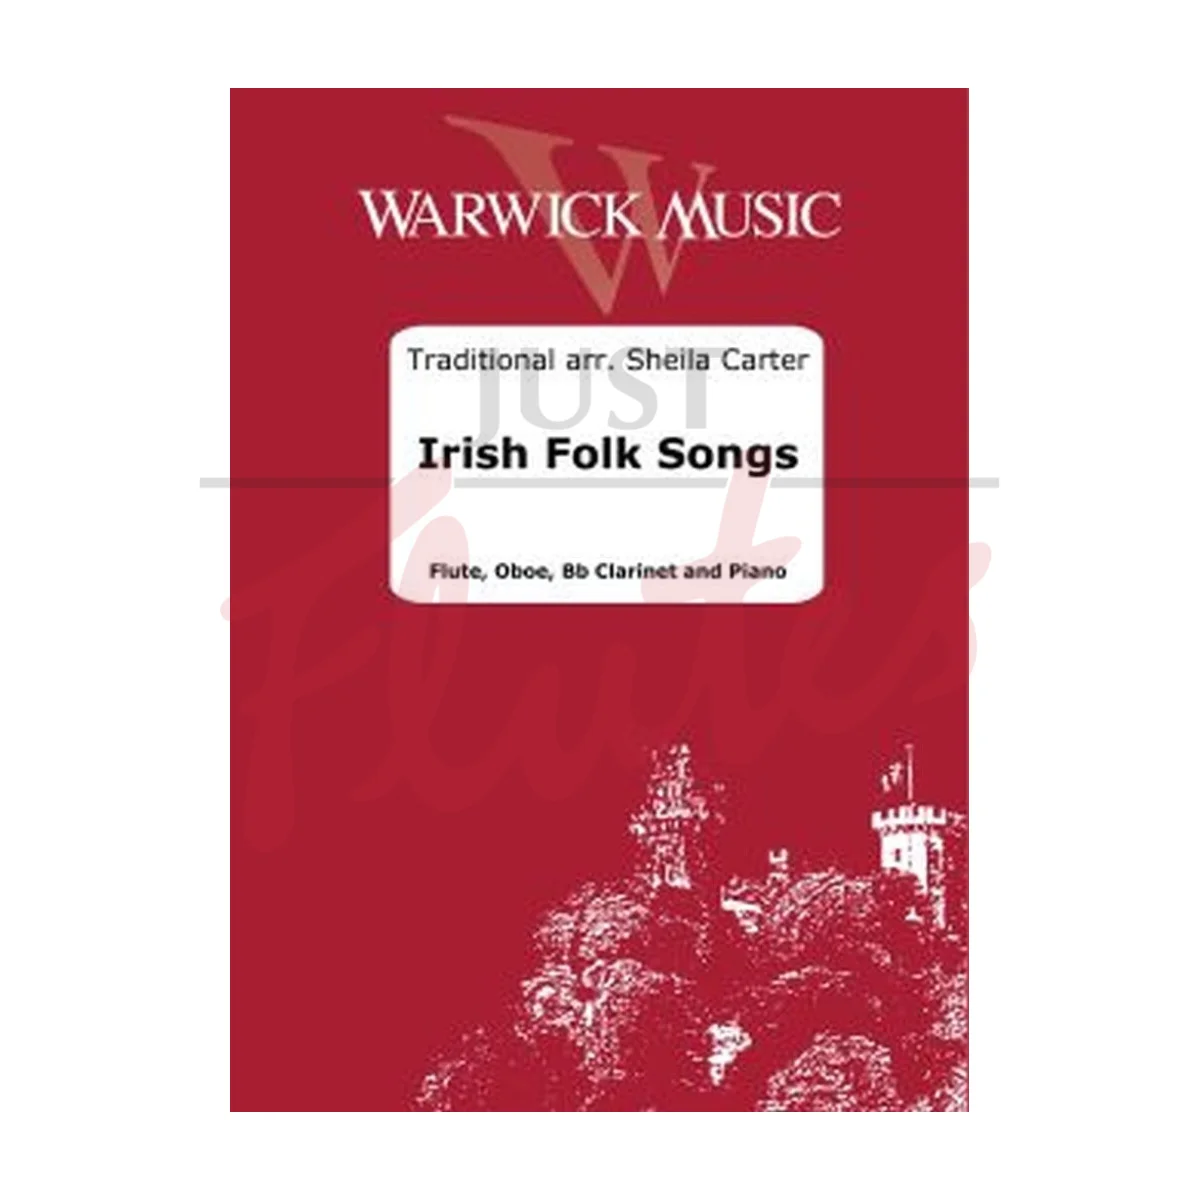 Irish Folk Songs for Flute, Oboe, Clarinet and Piano